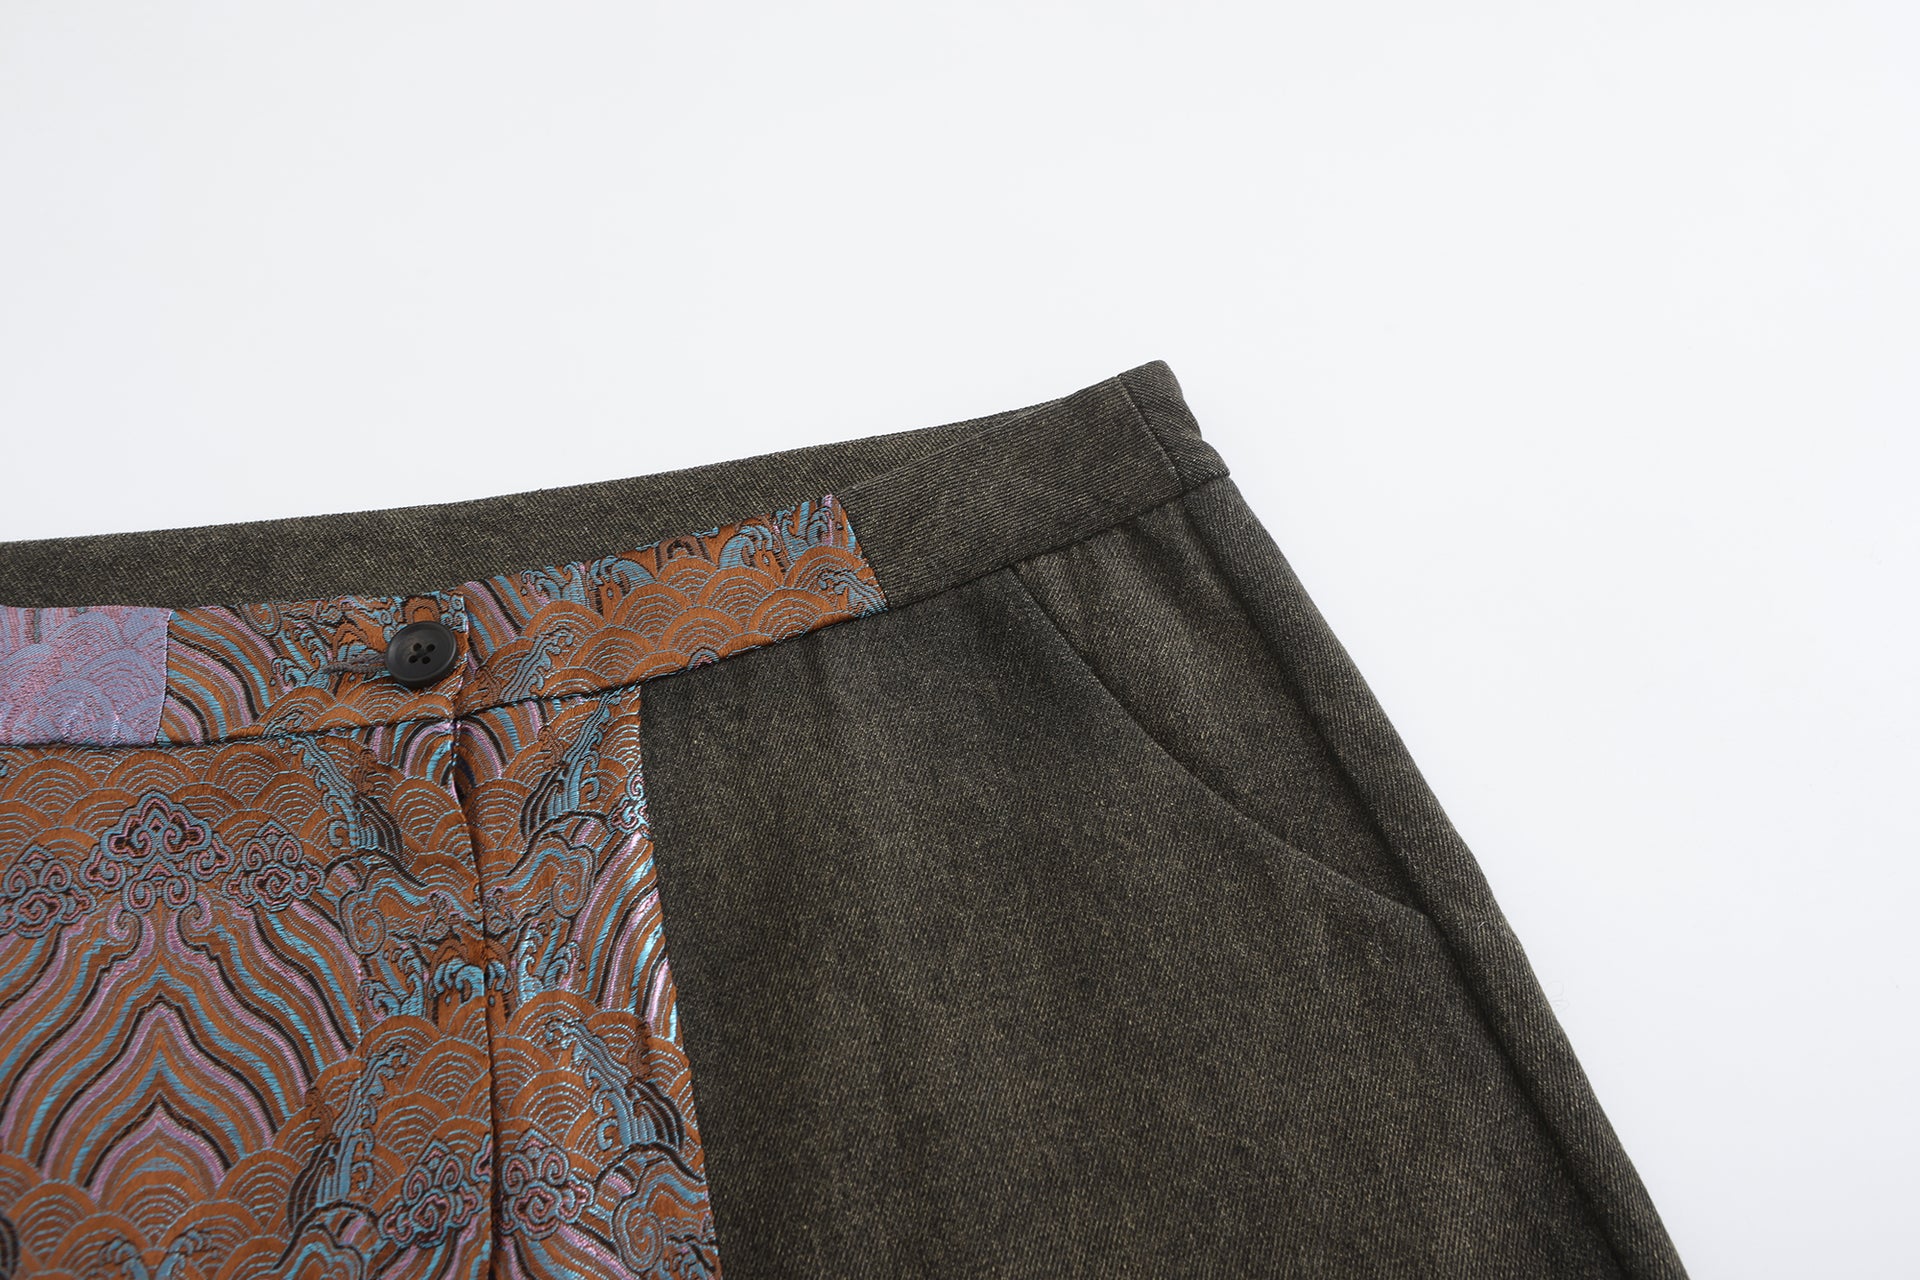 Dan Denim Patch Mini Skirt, Denim Brocade Patch, pocket close up